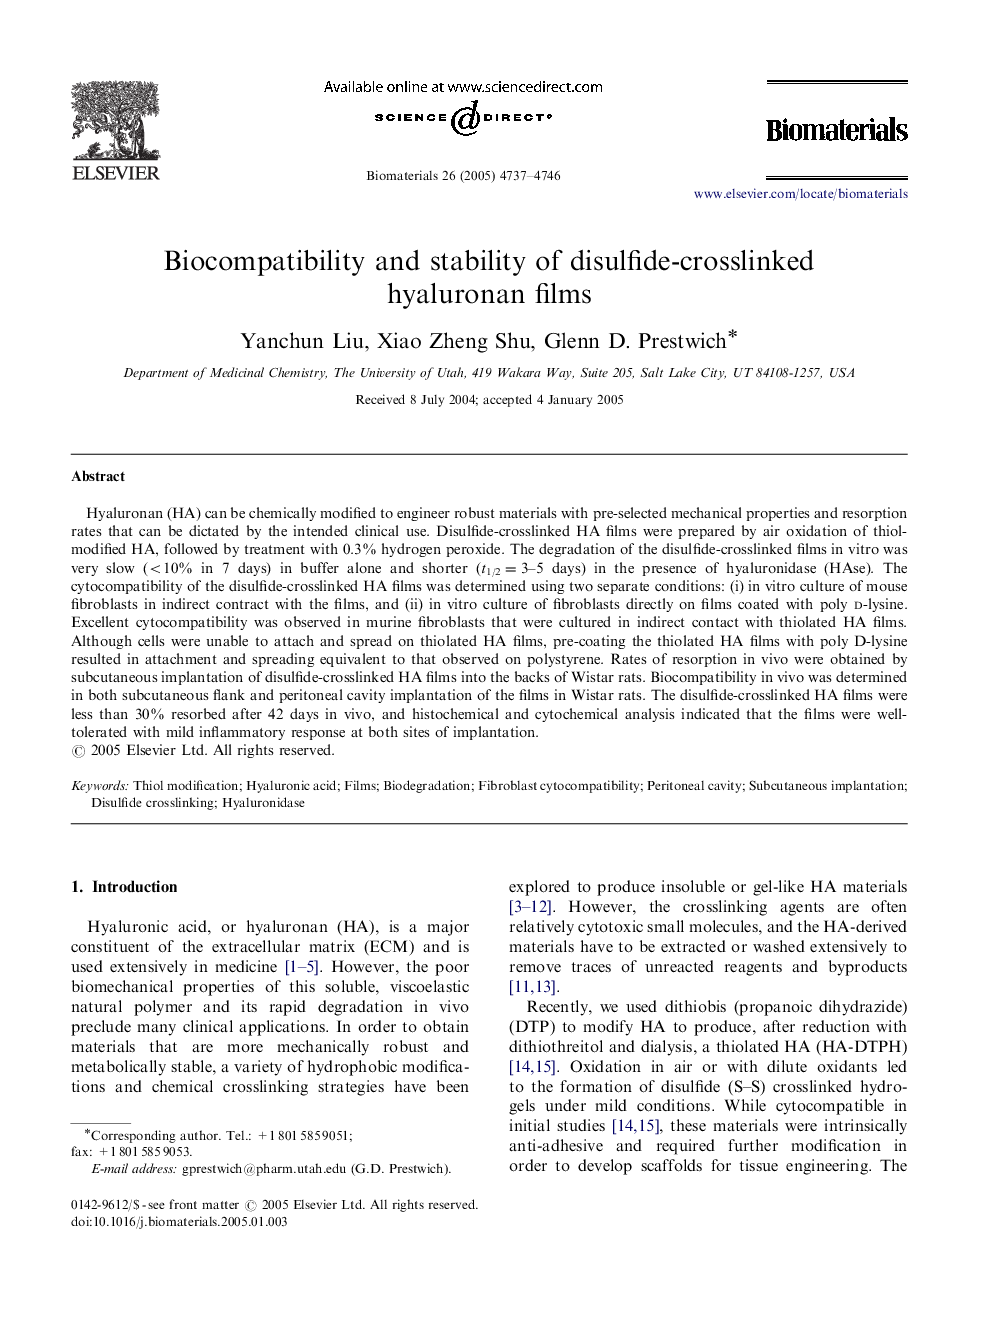 Biocompatibility and stability of disulfide-crosslinked hyaluronan films